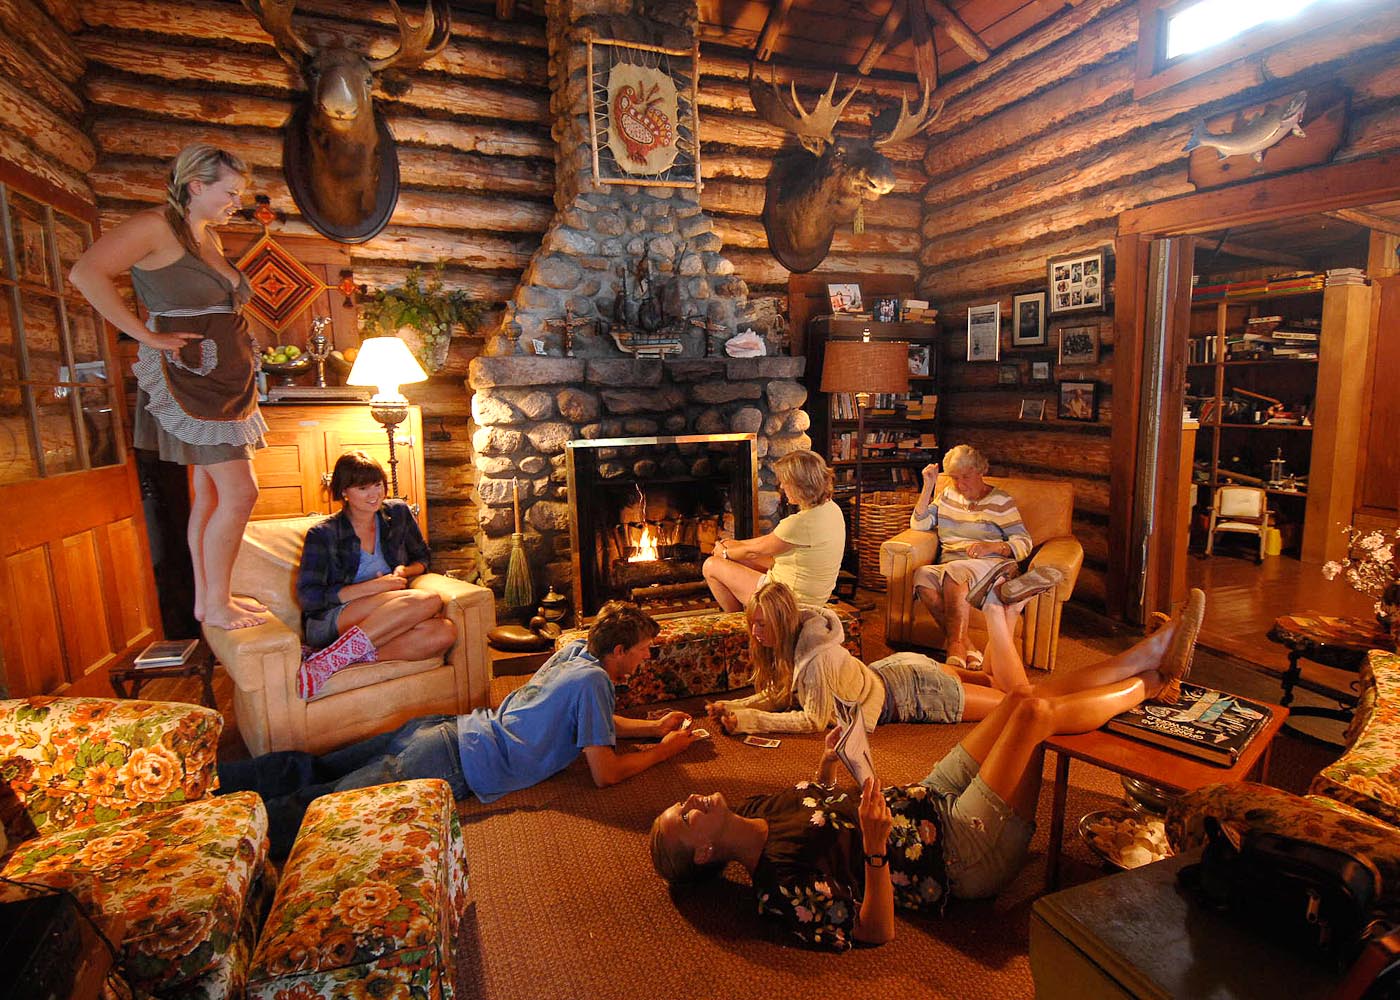 Cabin fireplace by Winnipeg editorial photographer